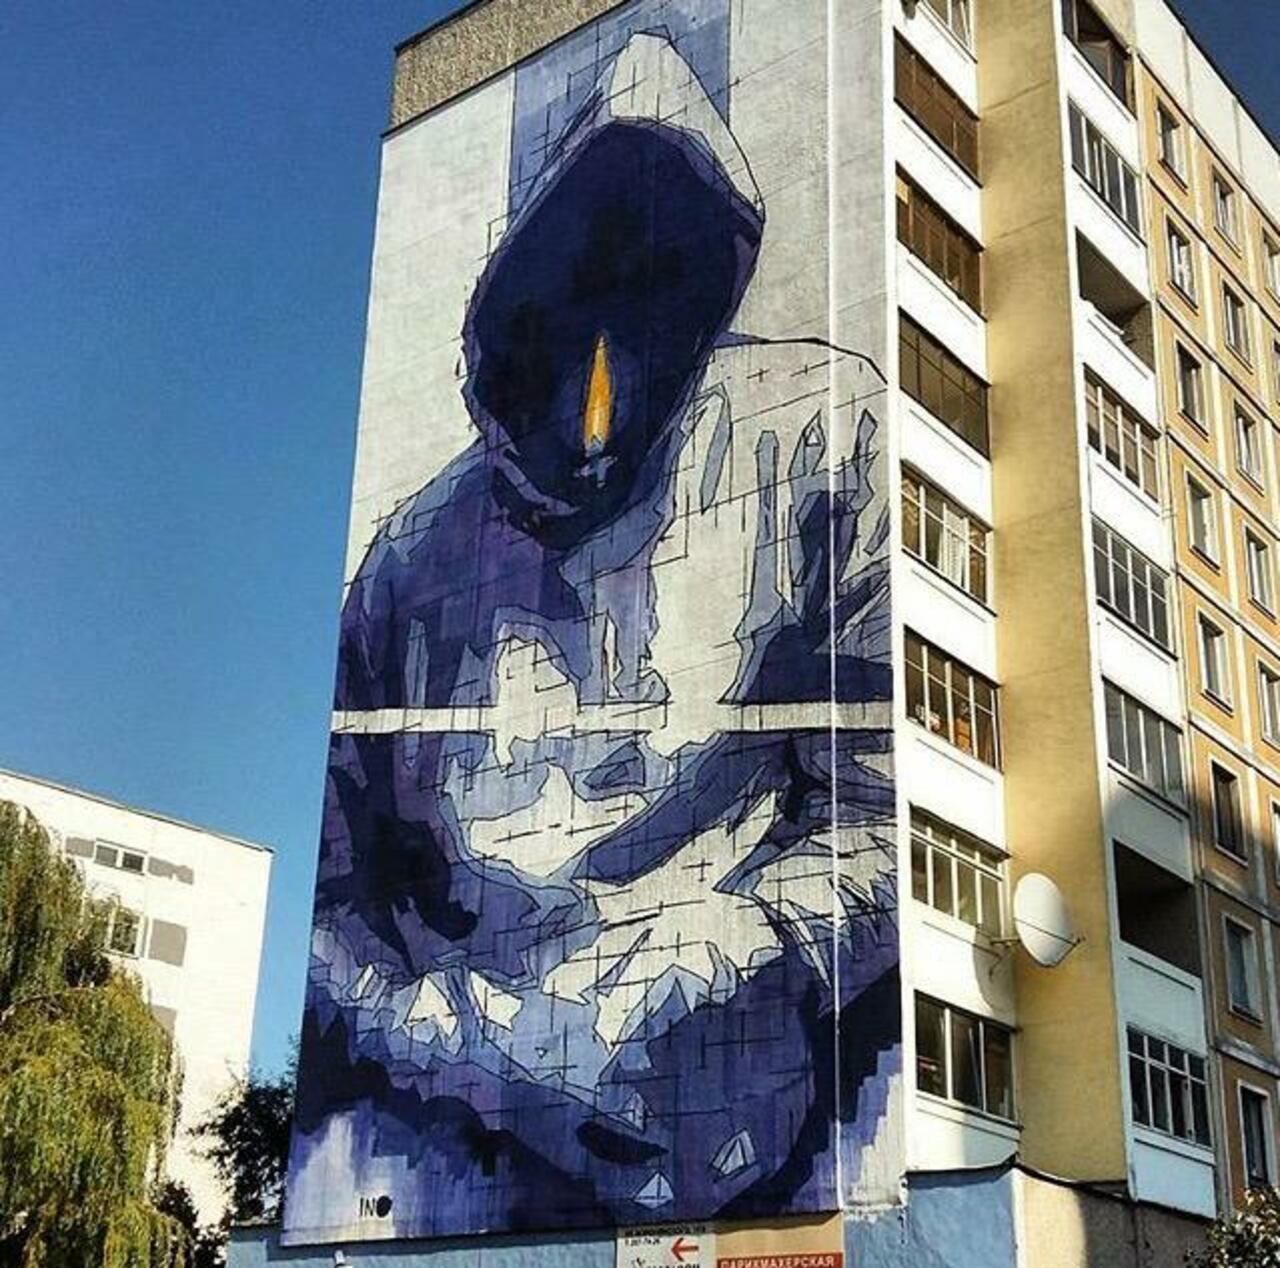 'Man With No Name' 
New Street Art by iNO in Minsk, Belarus 

#art #graffiti #mural #streetart http://t.co/ICTZET4Yh4